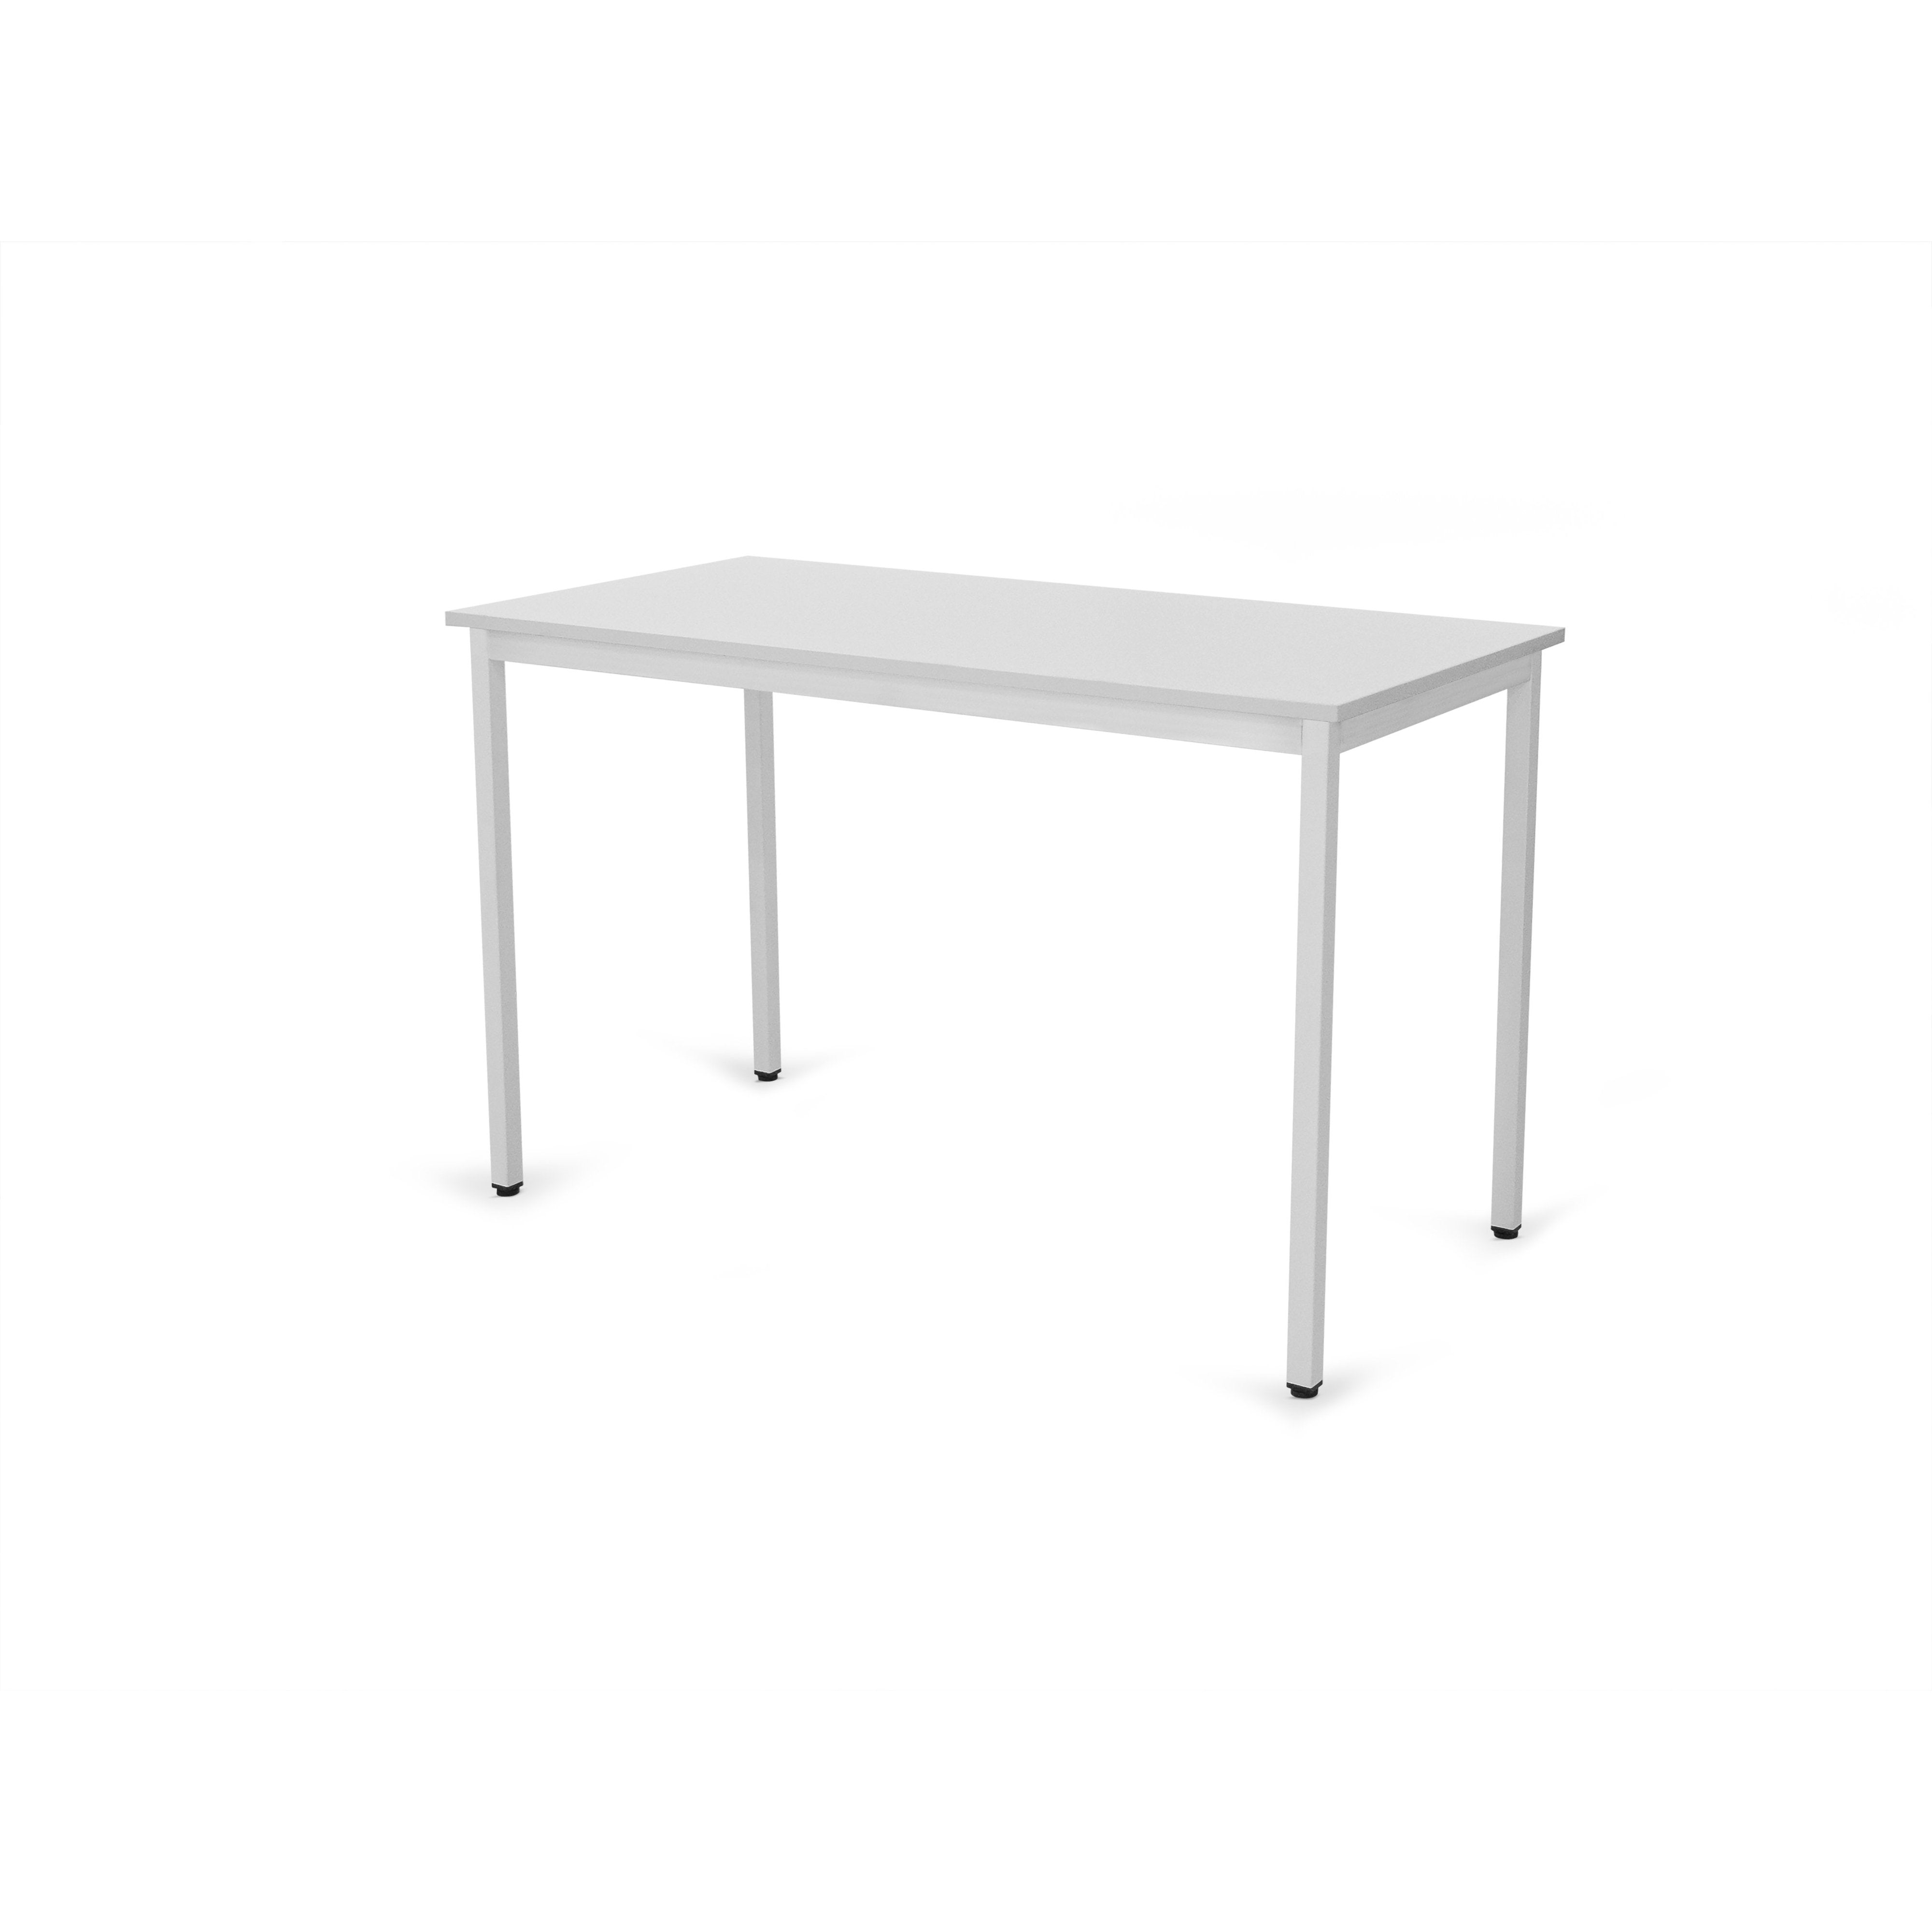 Duramax Tables White DuraMax Atlas Desk (3 Color Options)